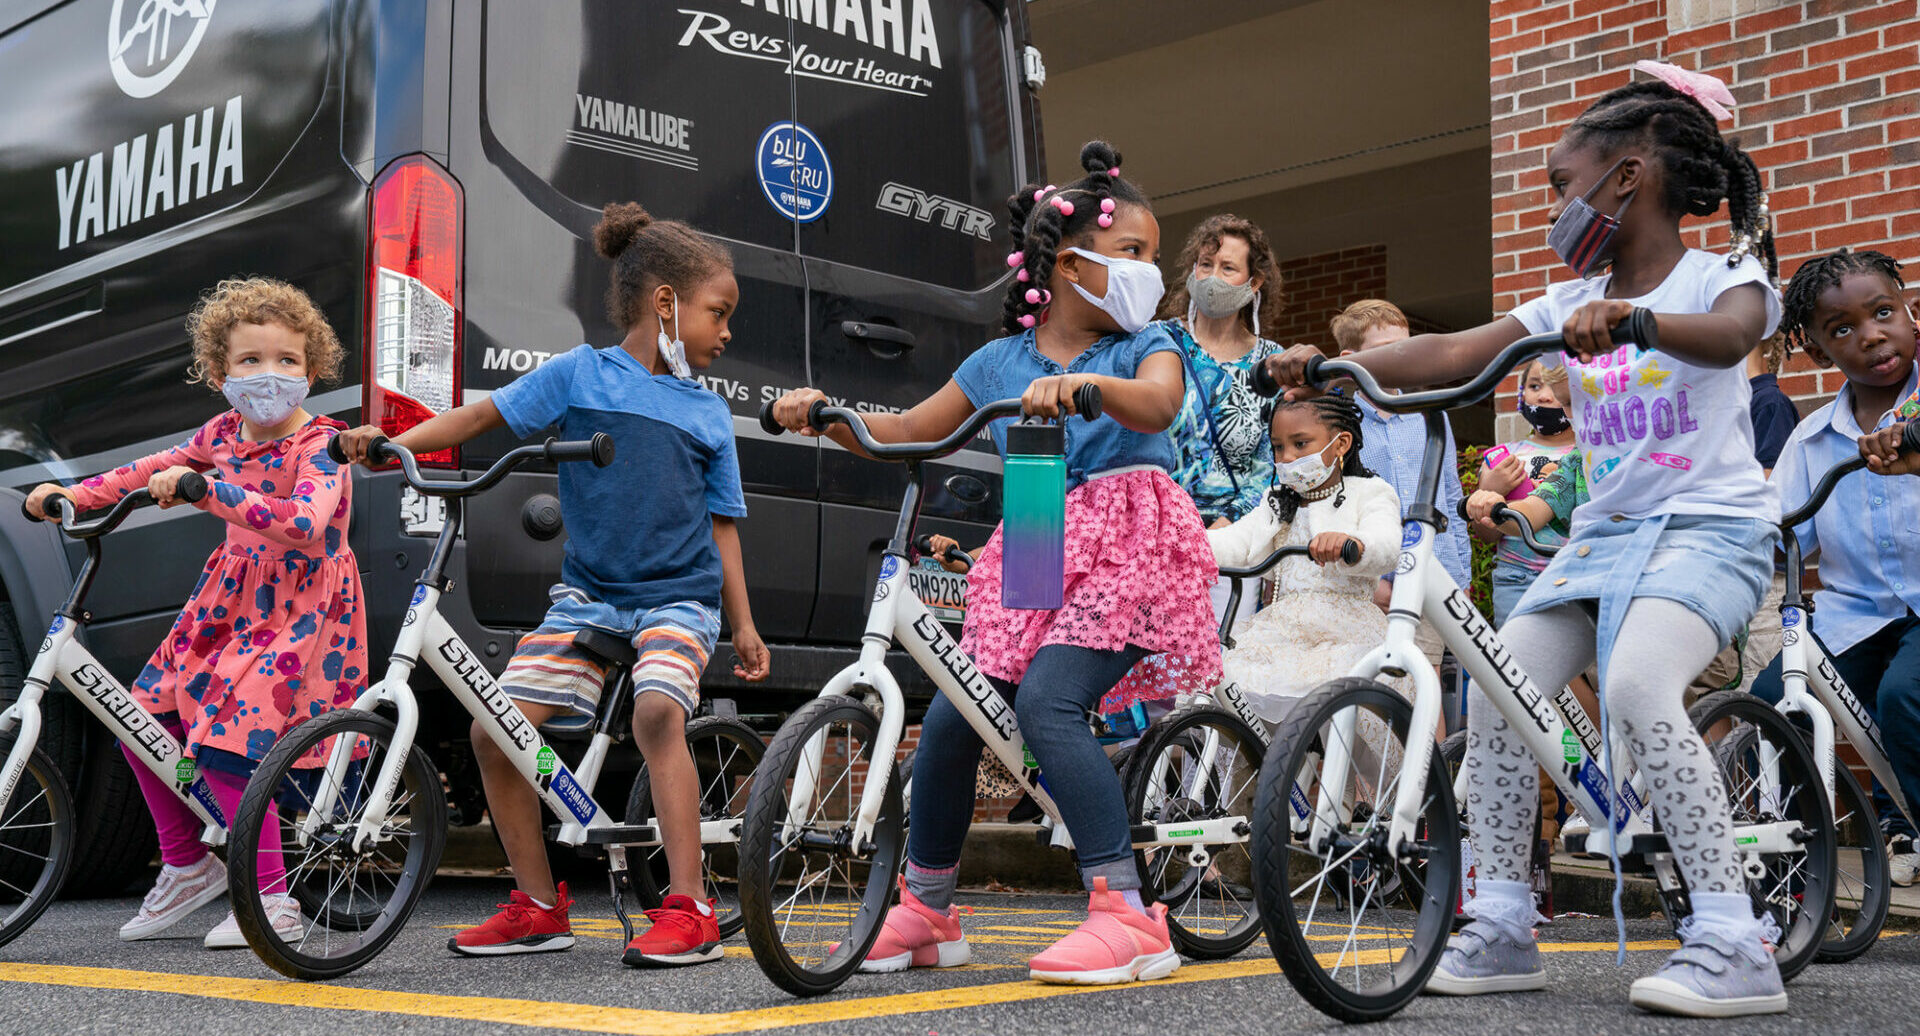 Kindergarten students taking part in the All Kids Bike program with Strider balance bikes. Photo courtesy Yamaha Motor Corp., U.S.A.